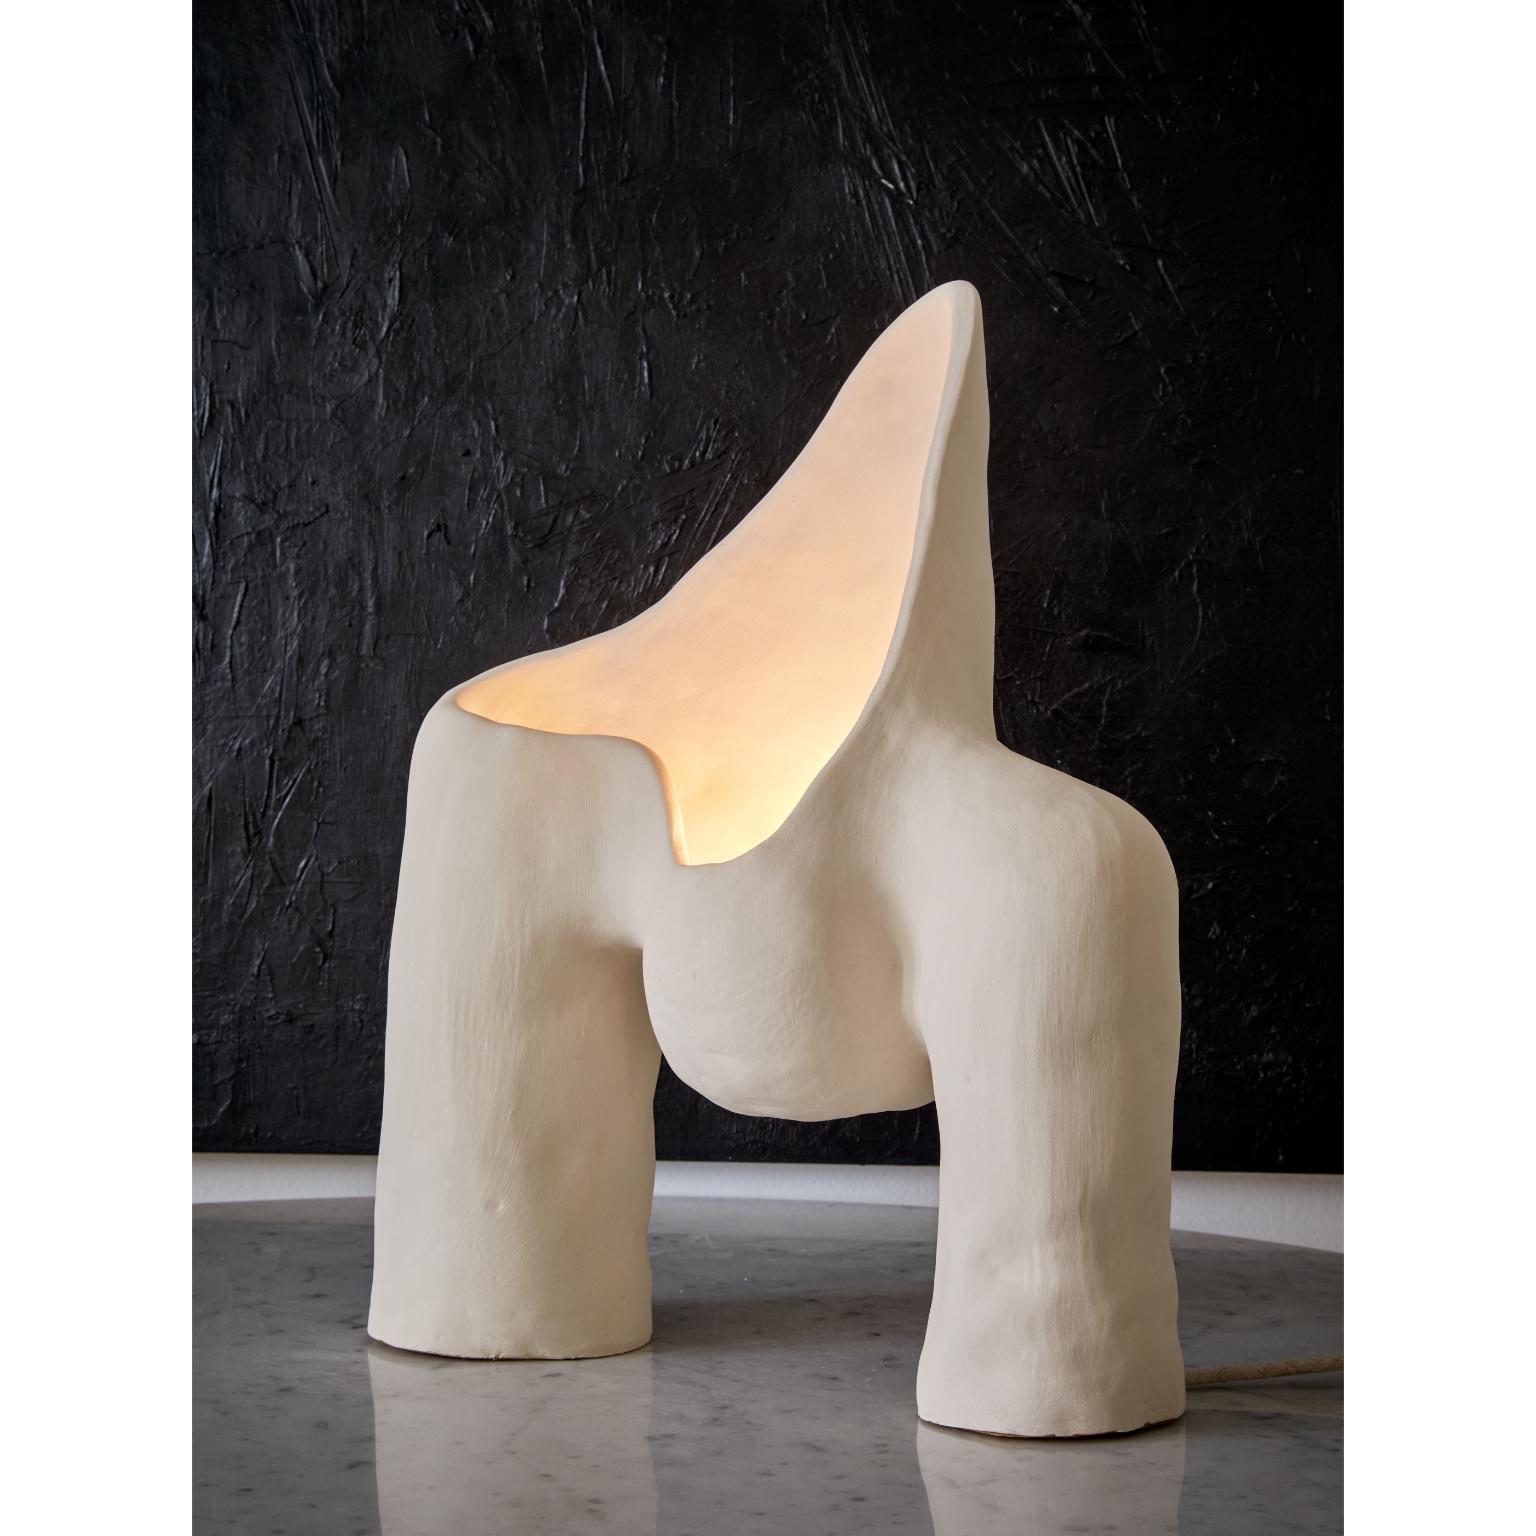 Unique Womb Table Lamp by Jan Ernst 1